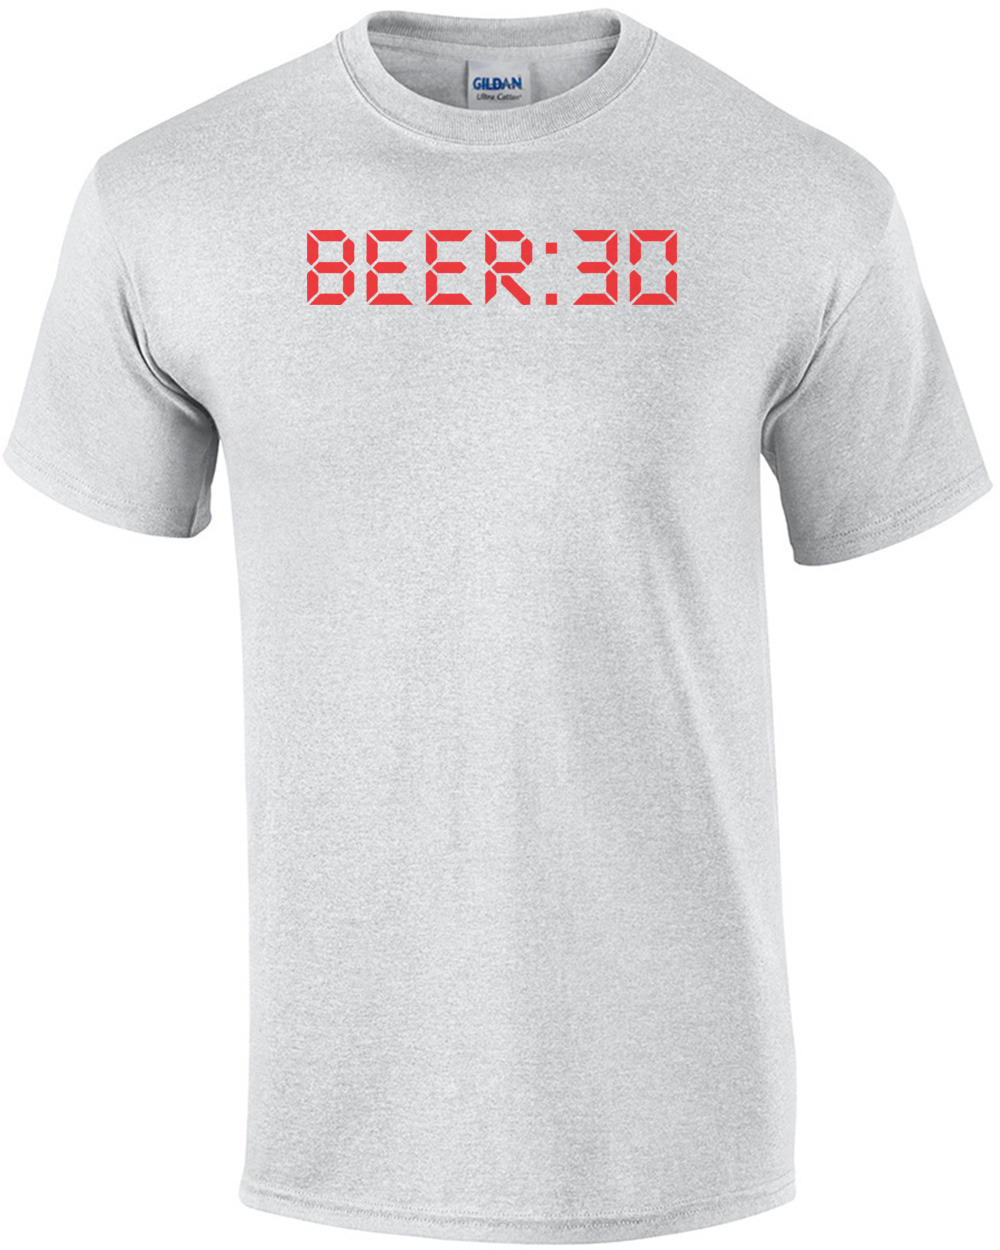 beer 30 shirt